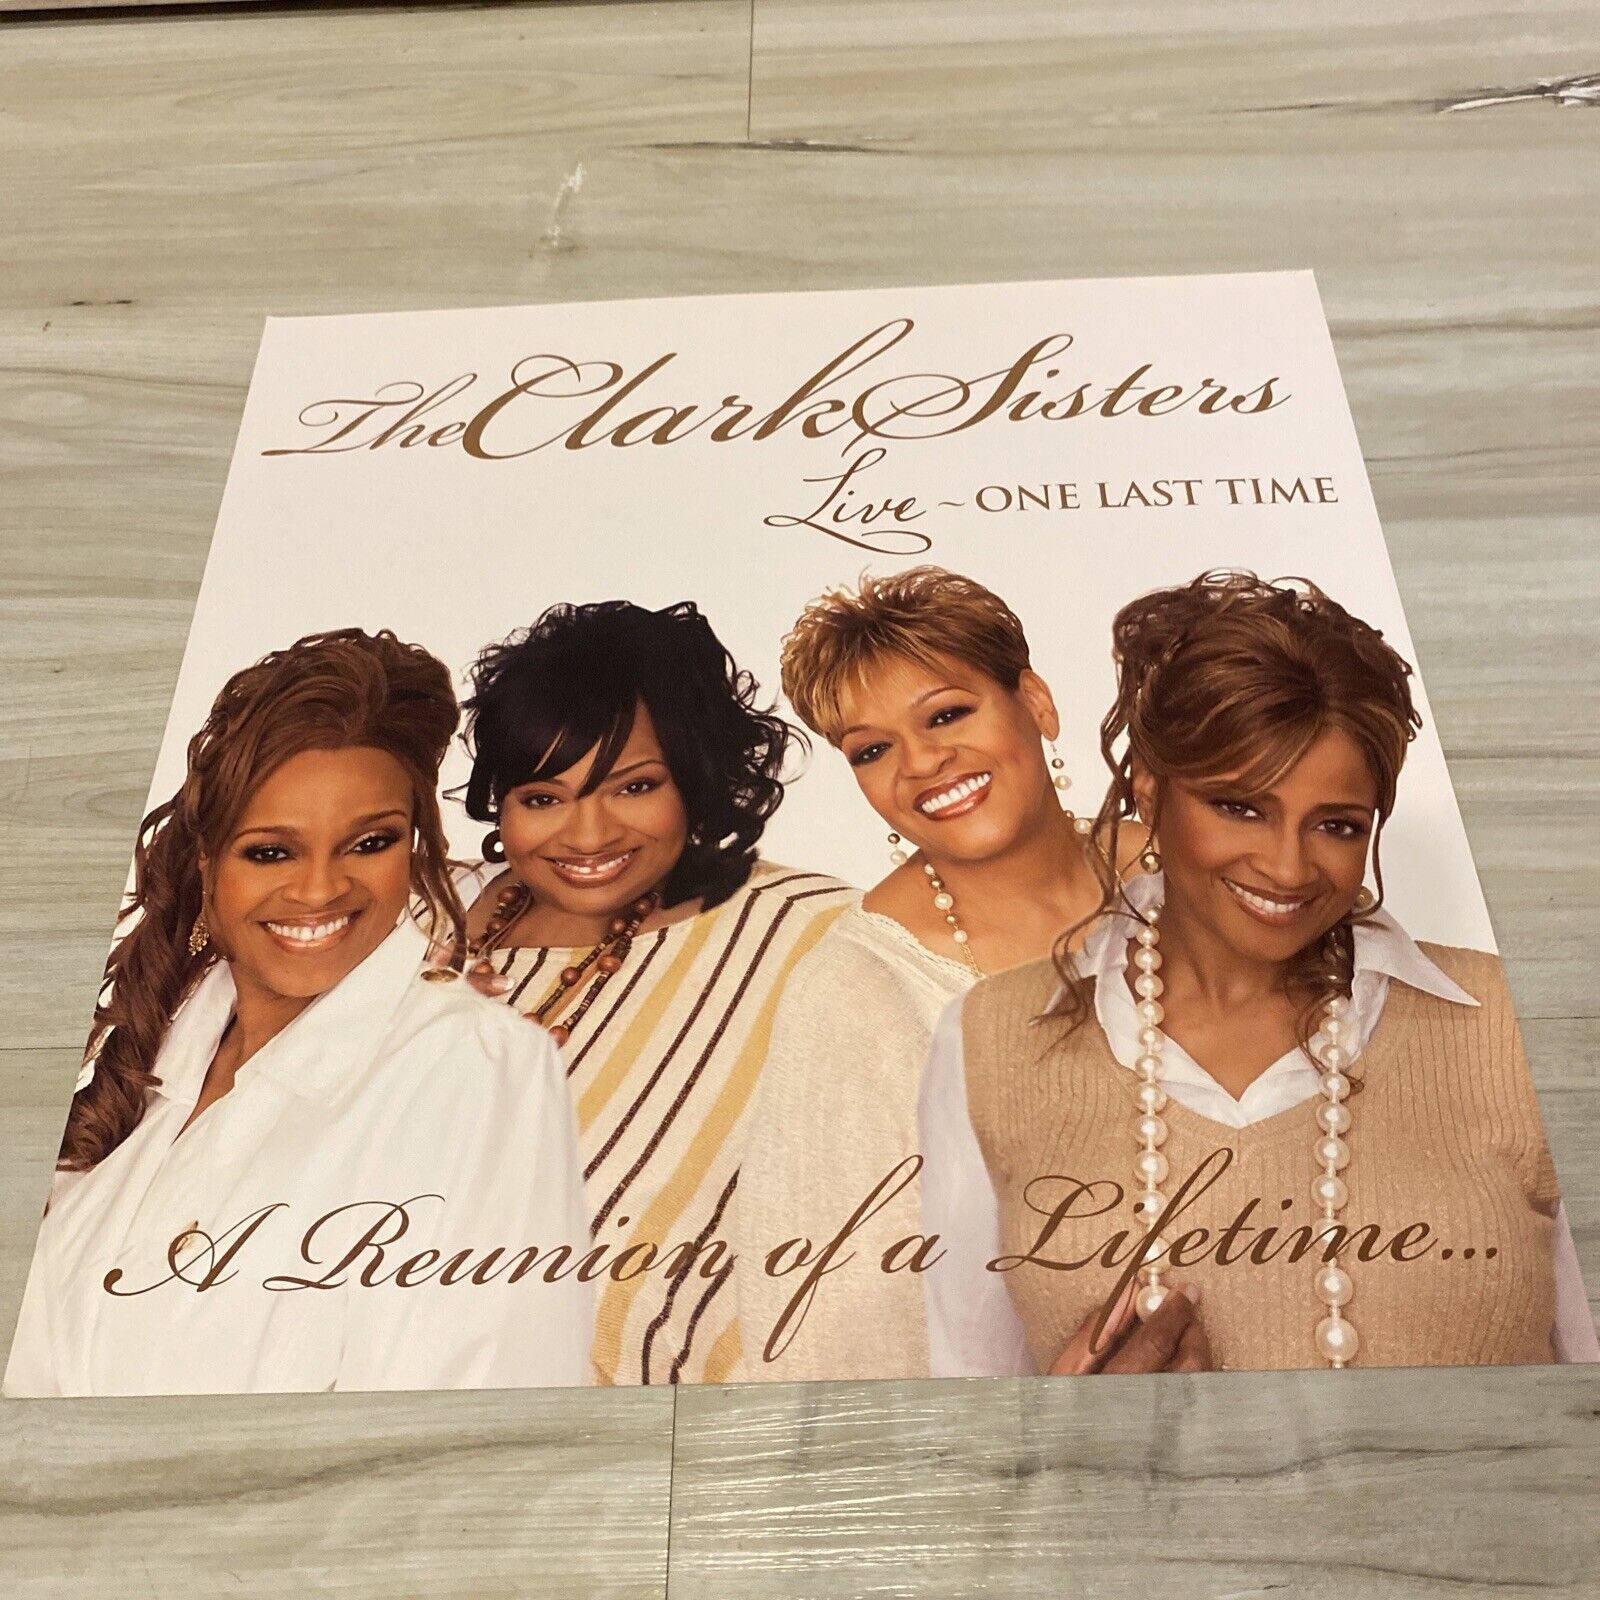 The Clark Sisters Reunion Of A Lifetime 12x12, Album Flat Poster Gospel